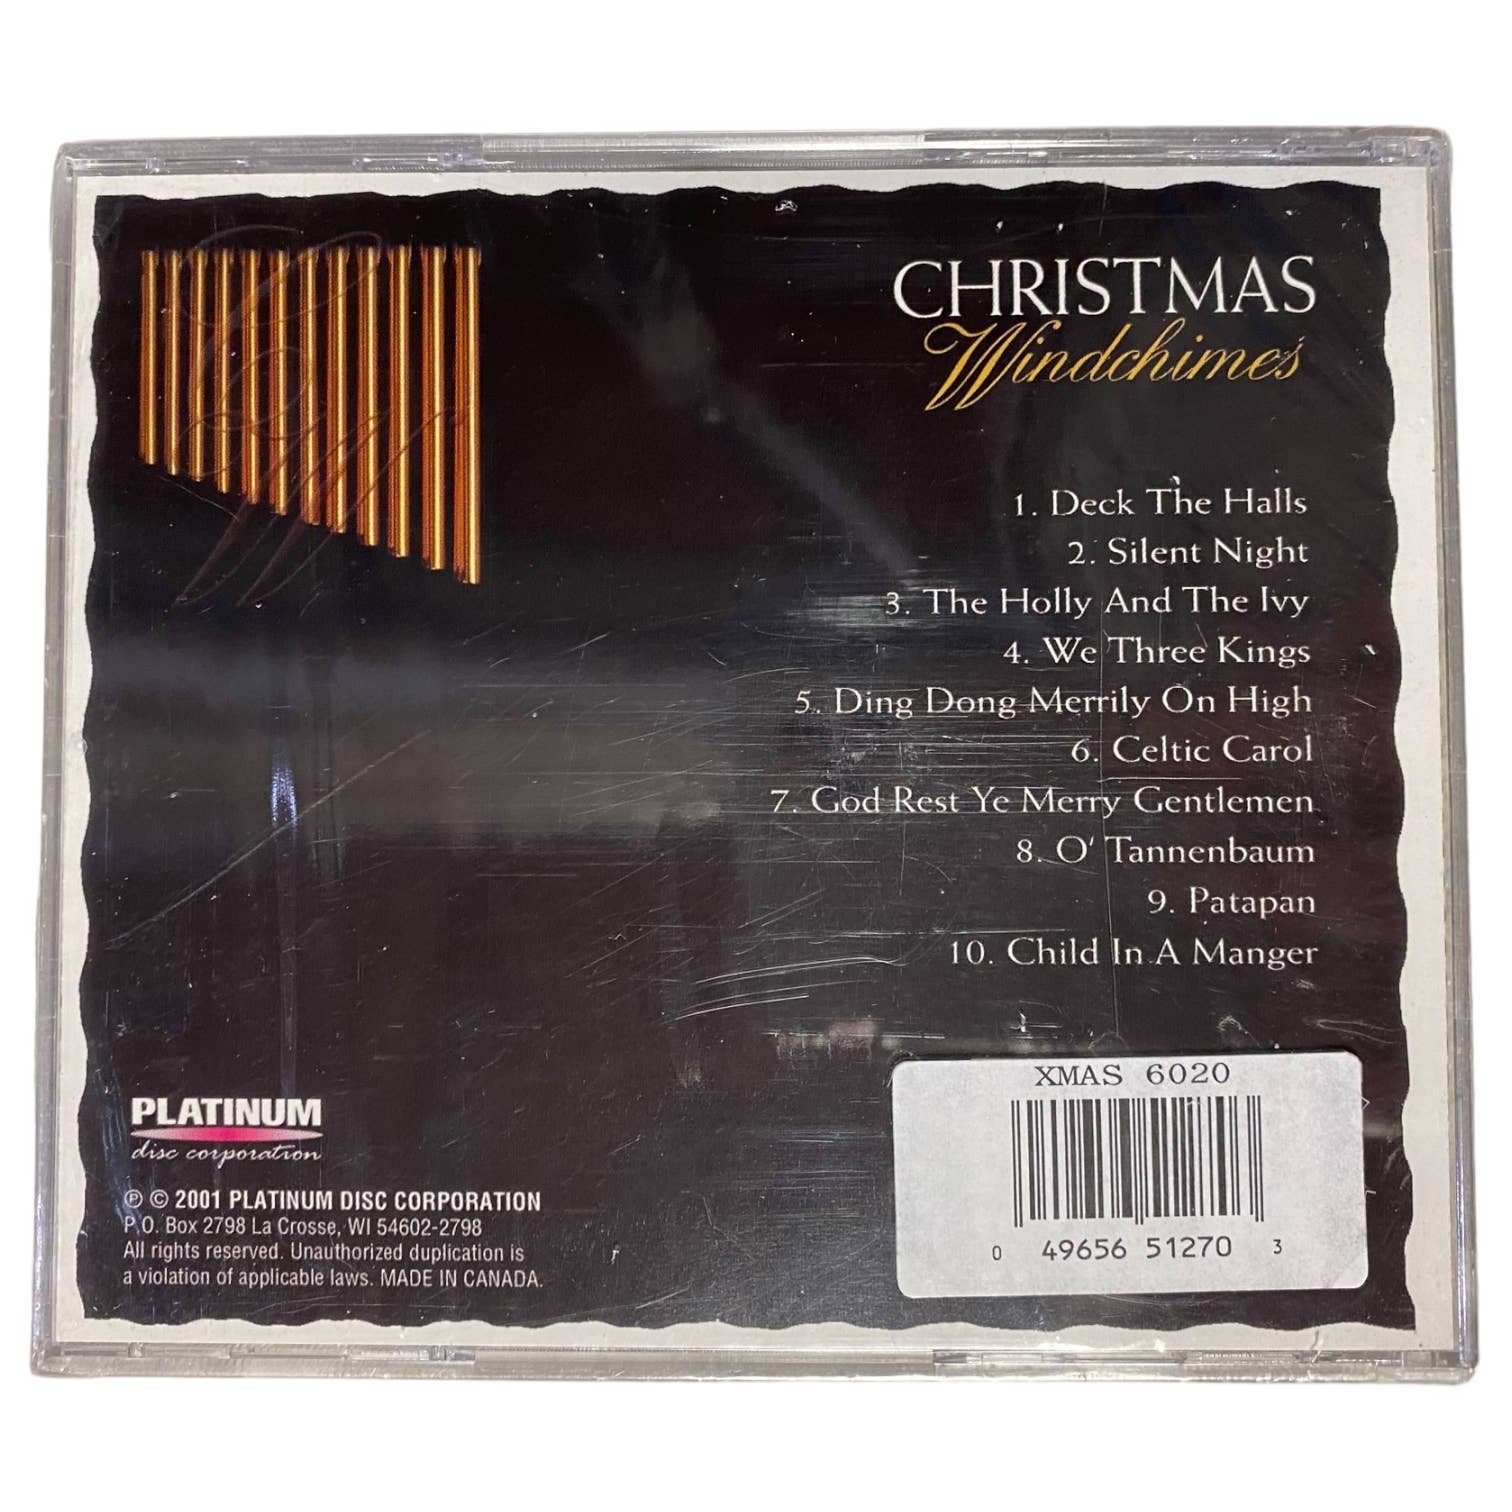 Christmas Windchimes - Audio CD Various